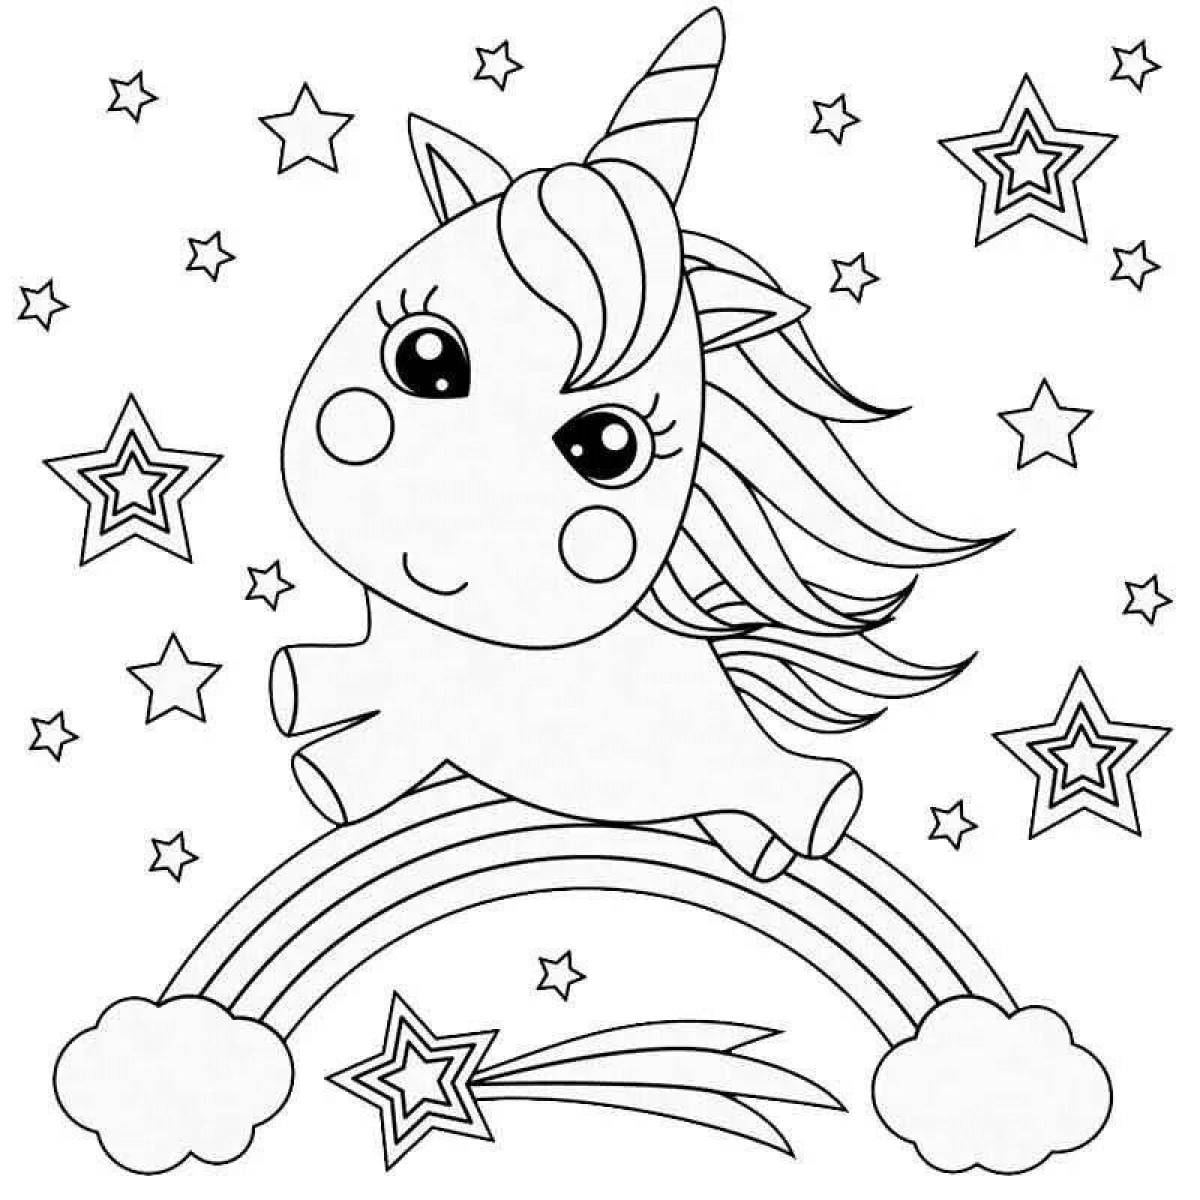 Kitty unicorn glamor coloring book